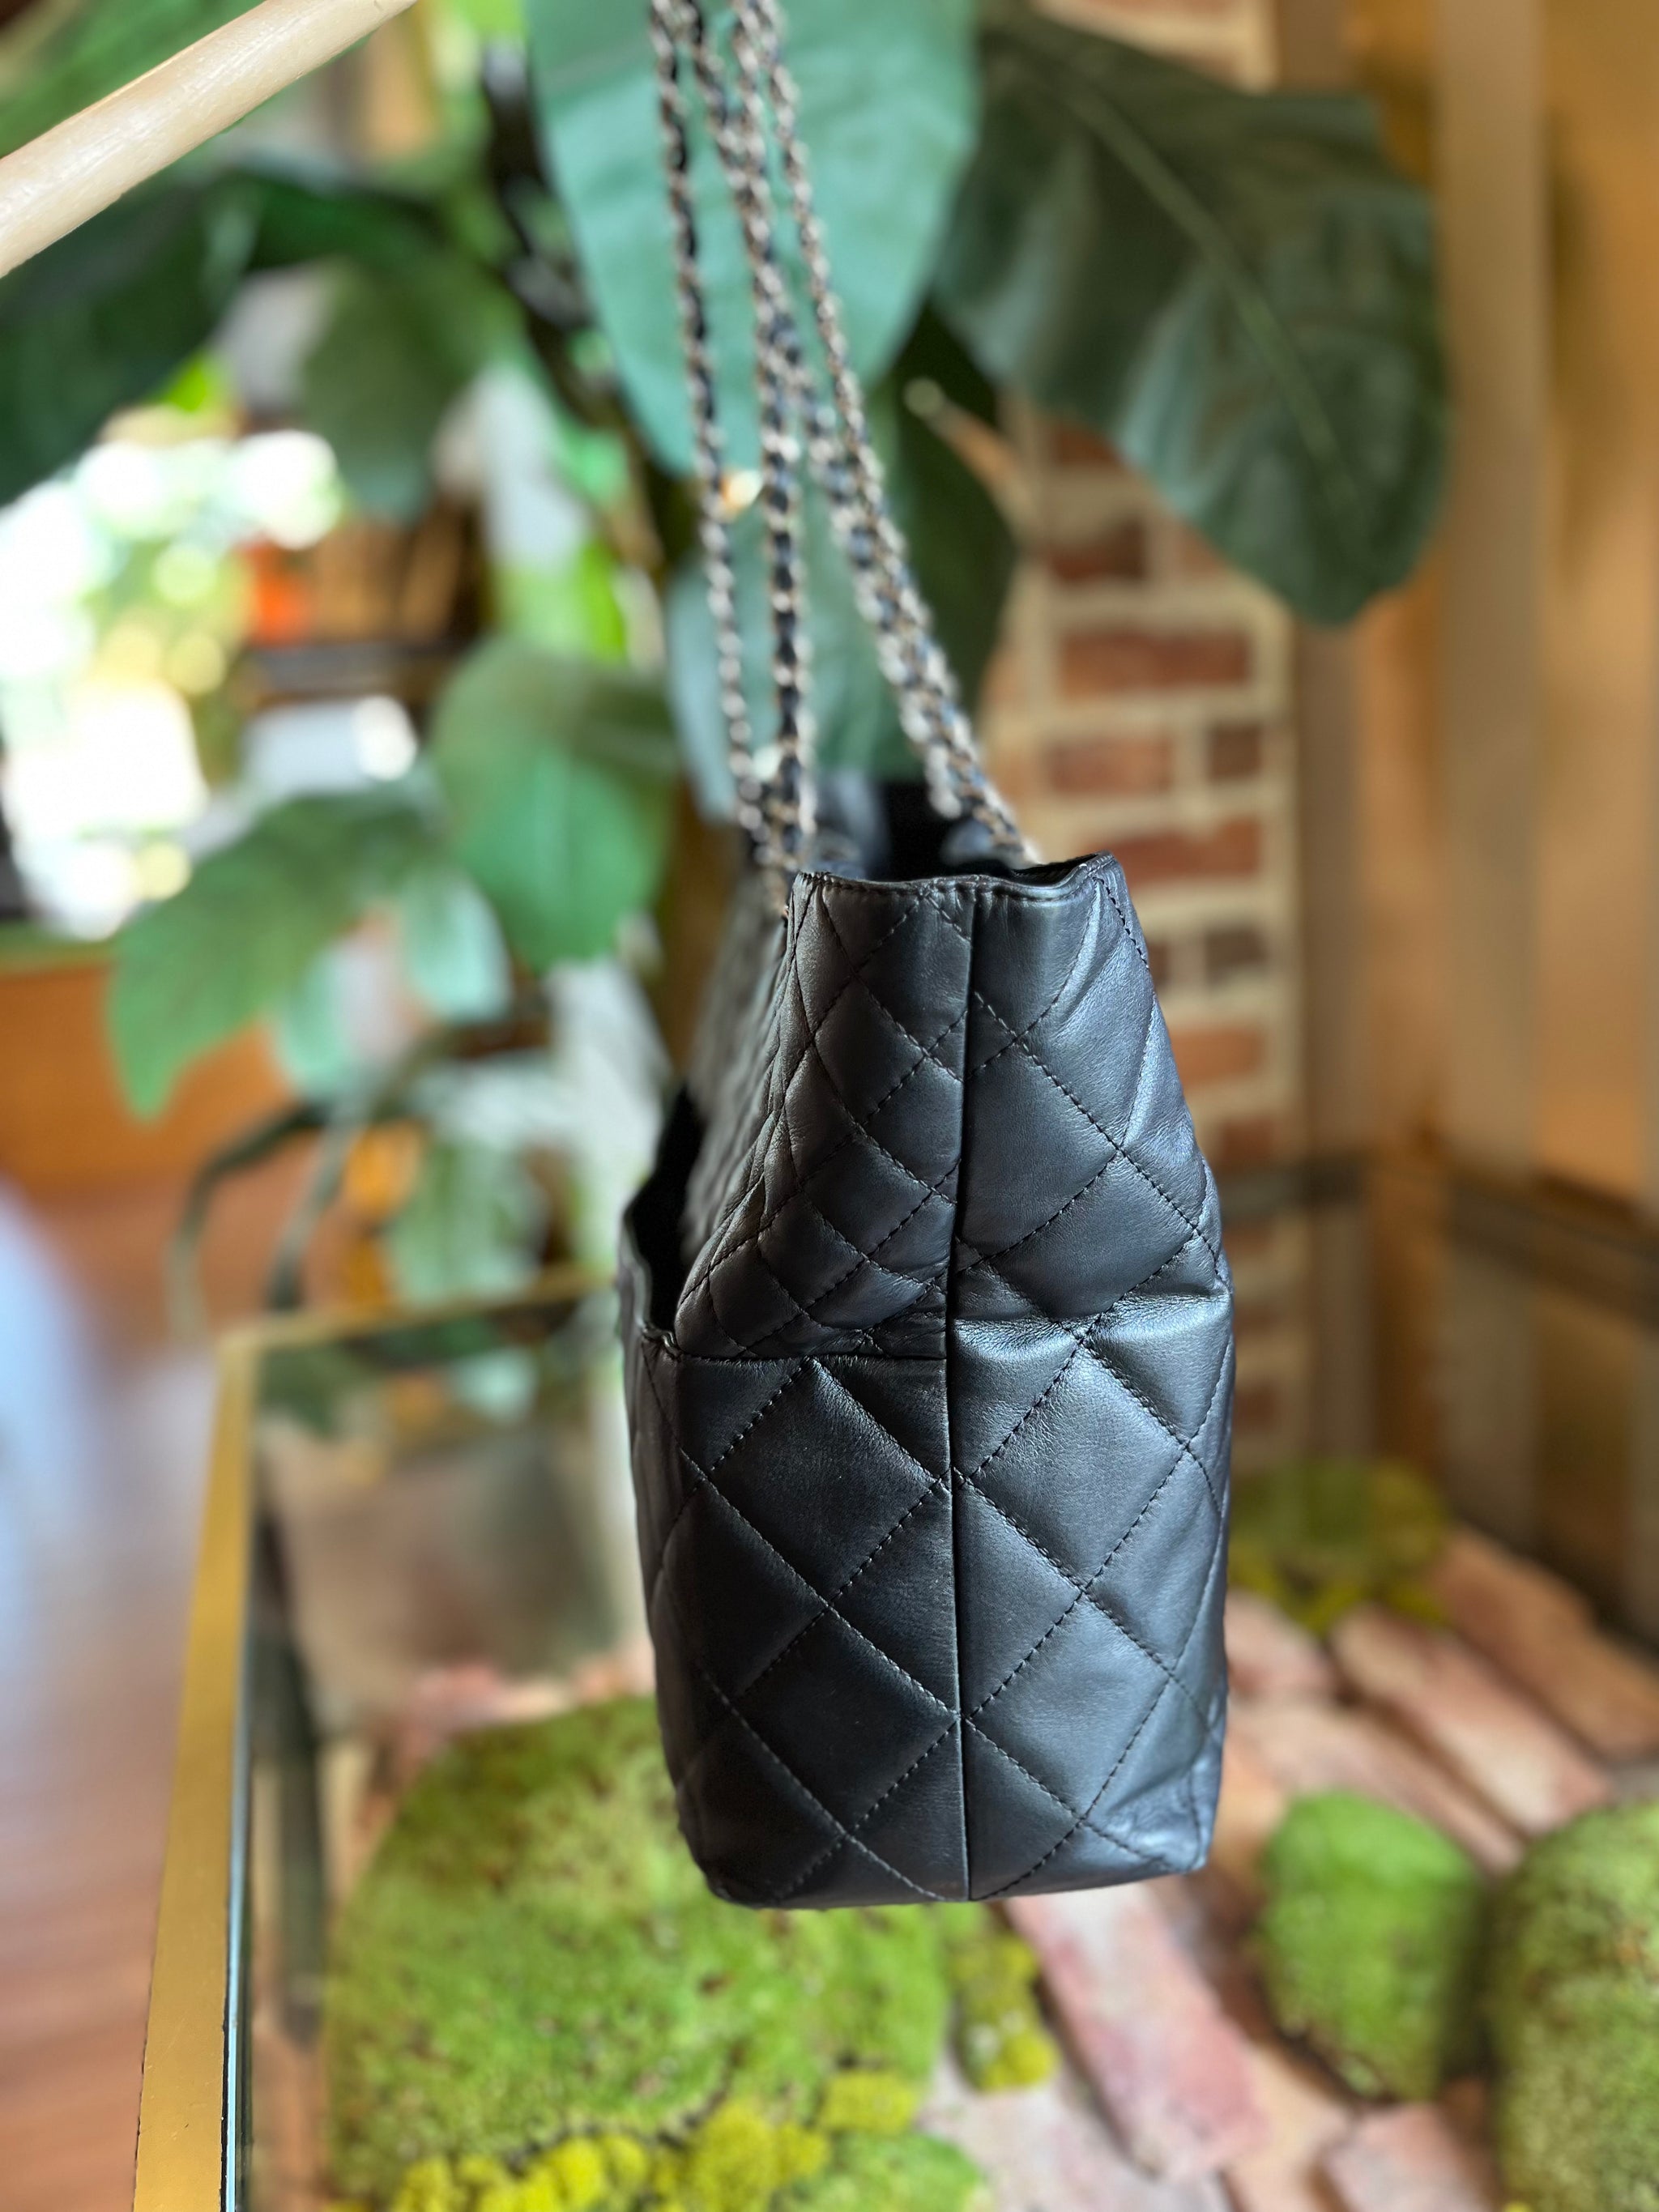 chanel bag black tote handbag